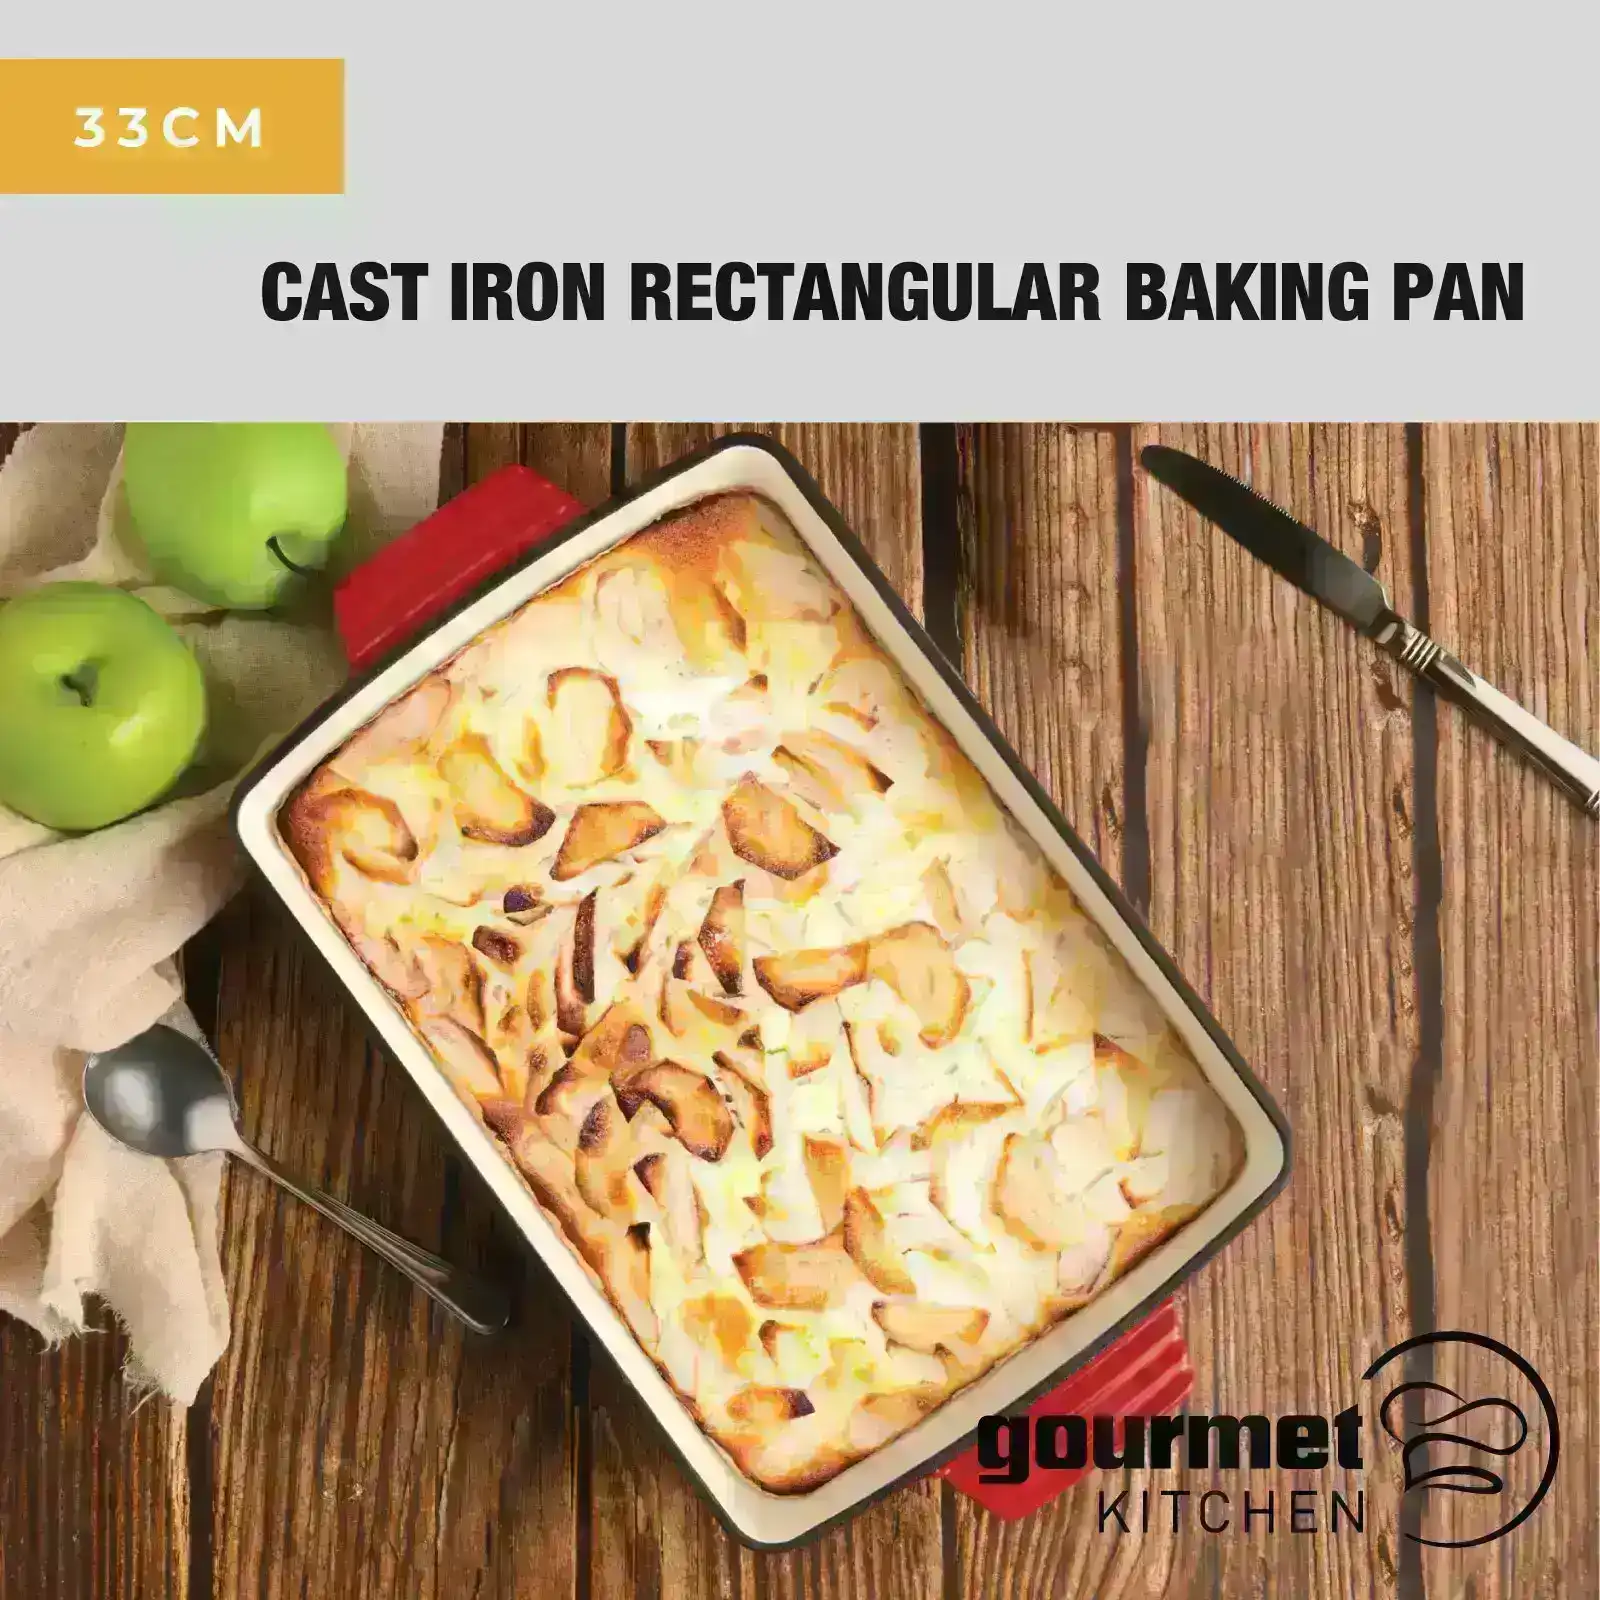 Gourmet Kitchen Cast Iron Rectangular Baking Pan 33cm Black Cherry Red